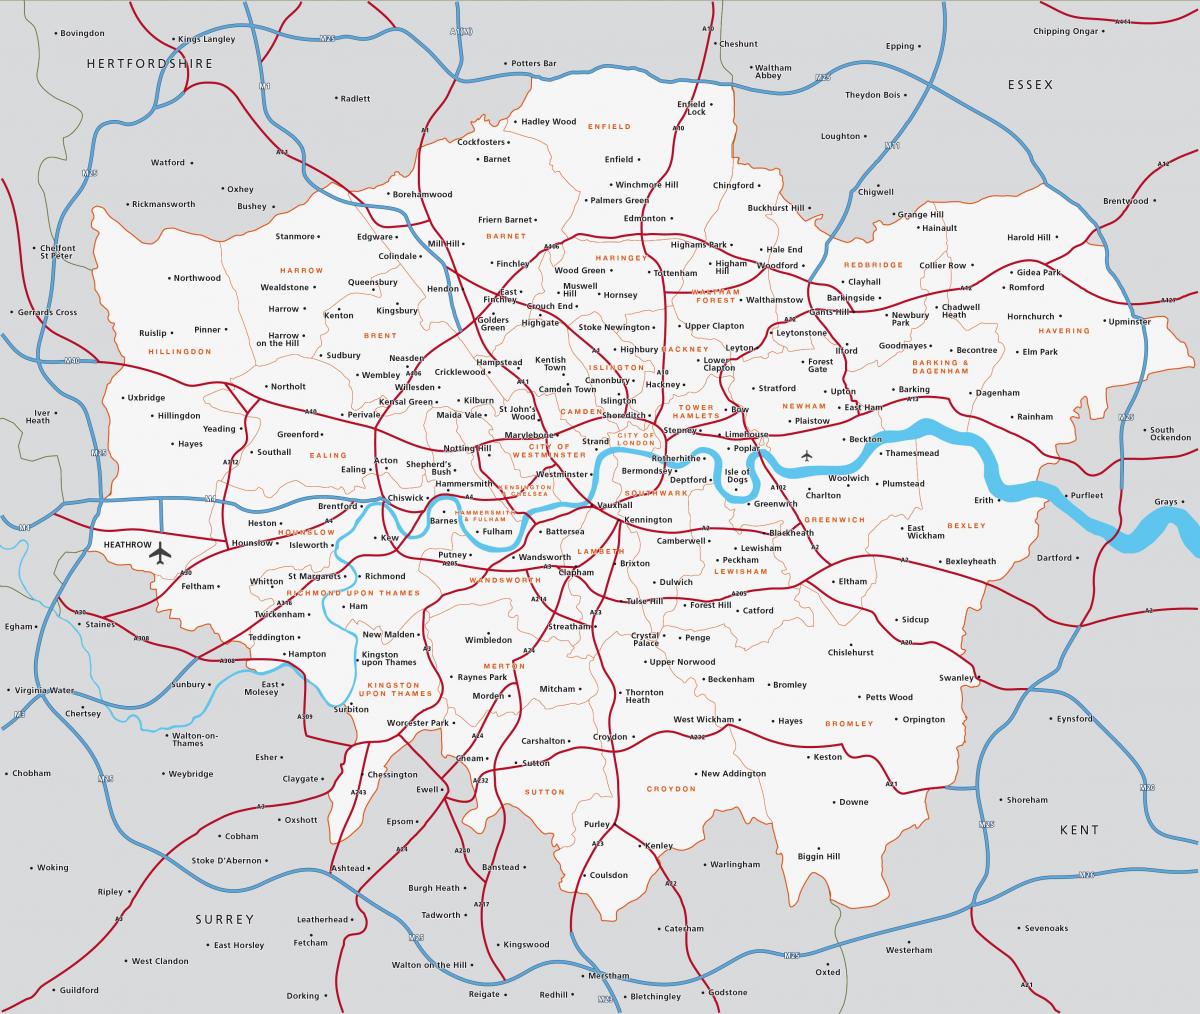 mappa di Londra